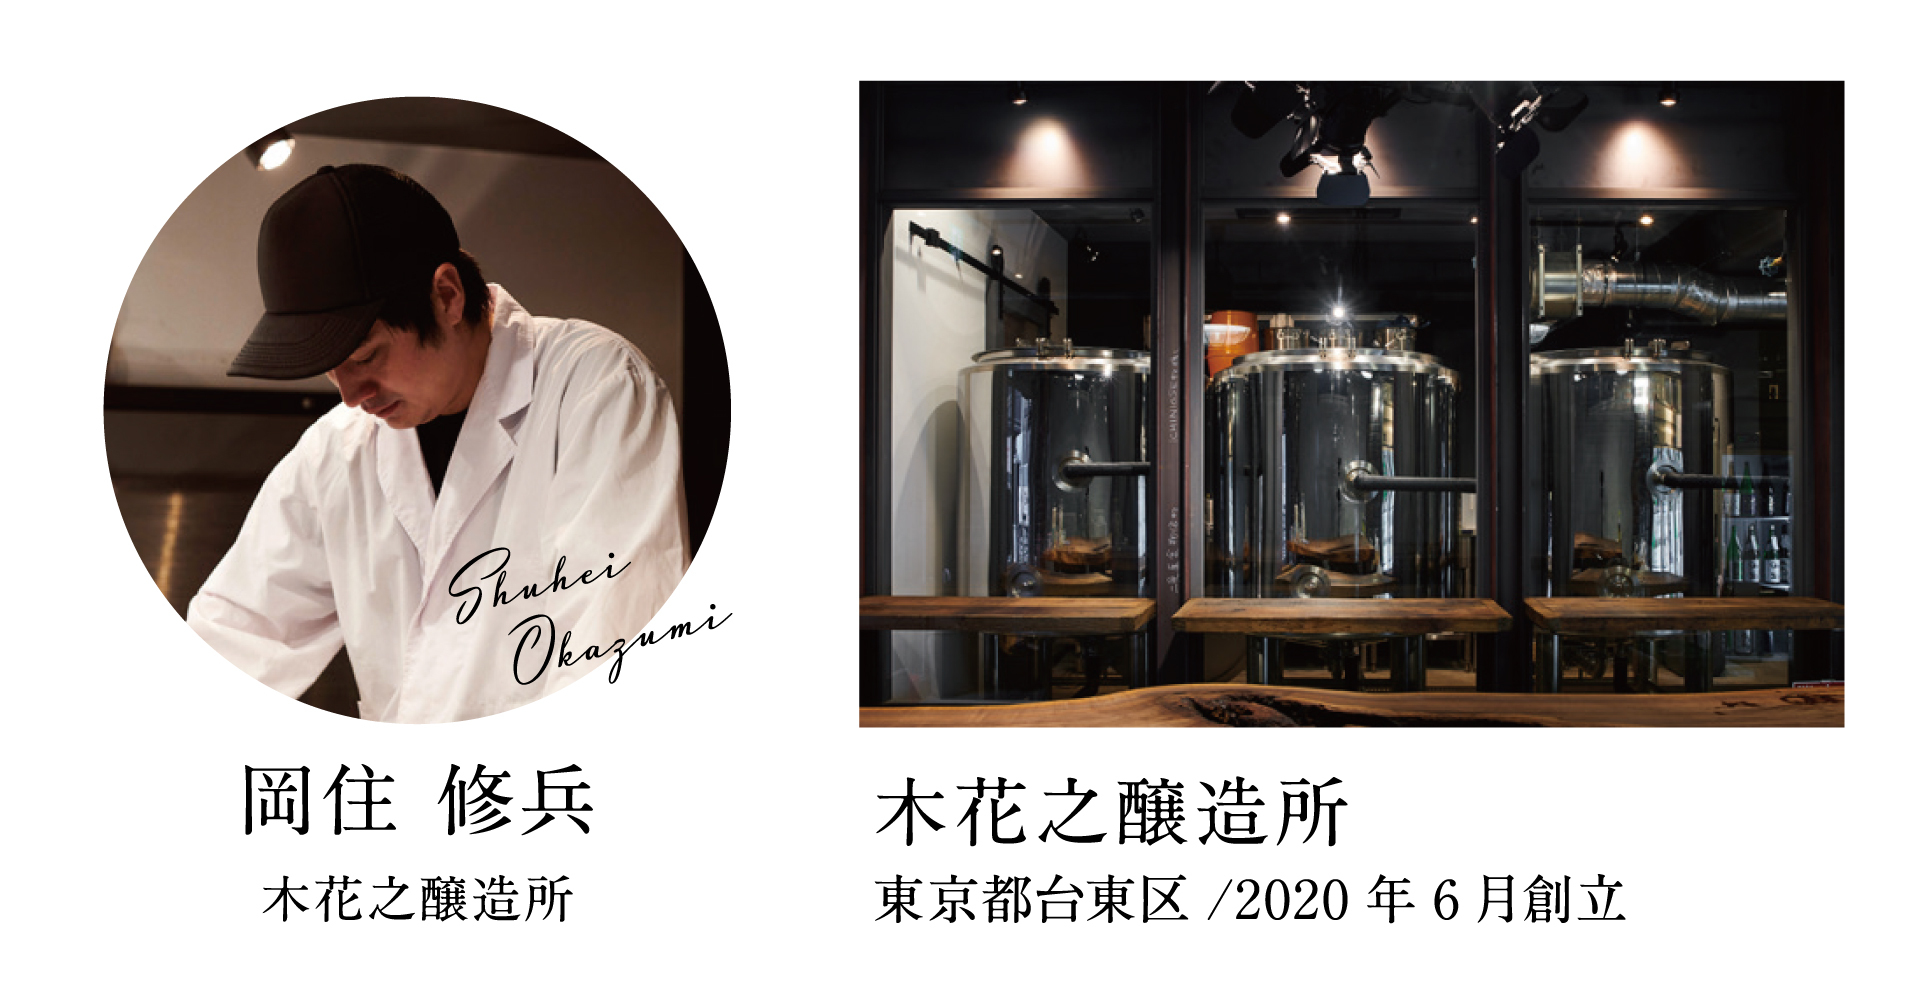 CraftSakeBreweryだからこその自由な酒造り「ホップのSake」WAKAZE×木花之醸造所×haccobaコラボレーションで6月25日発売開始